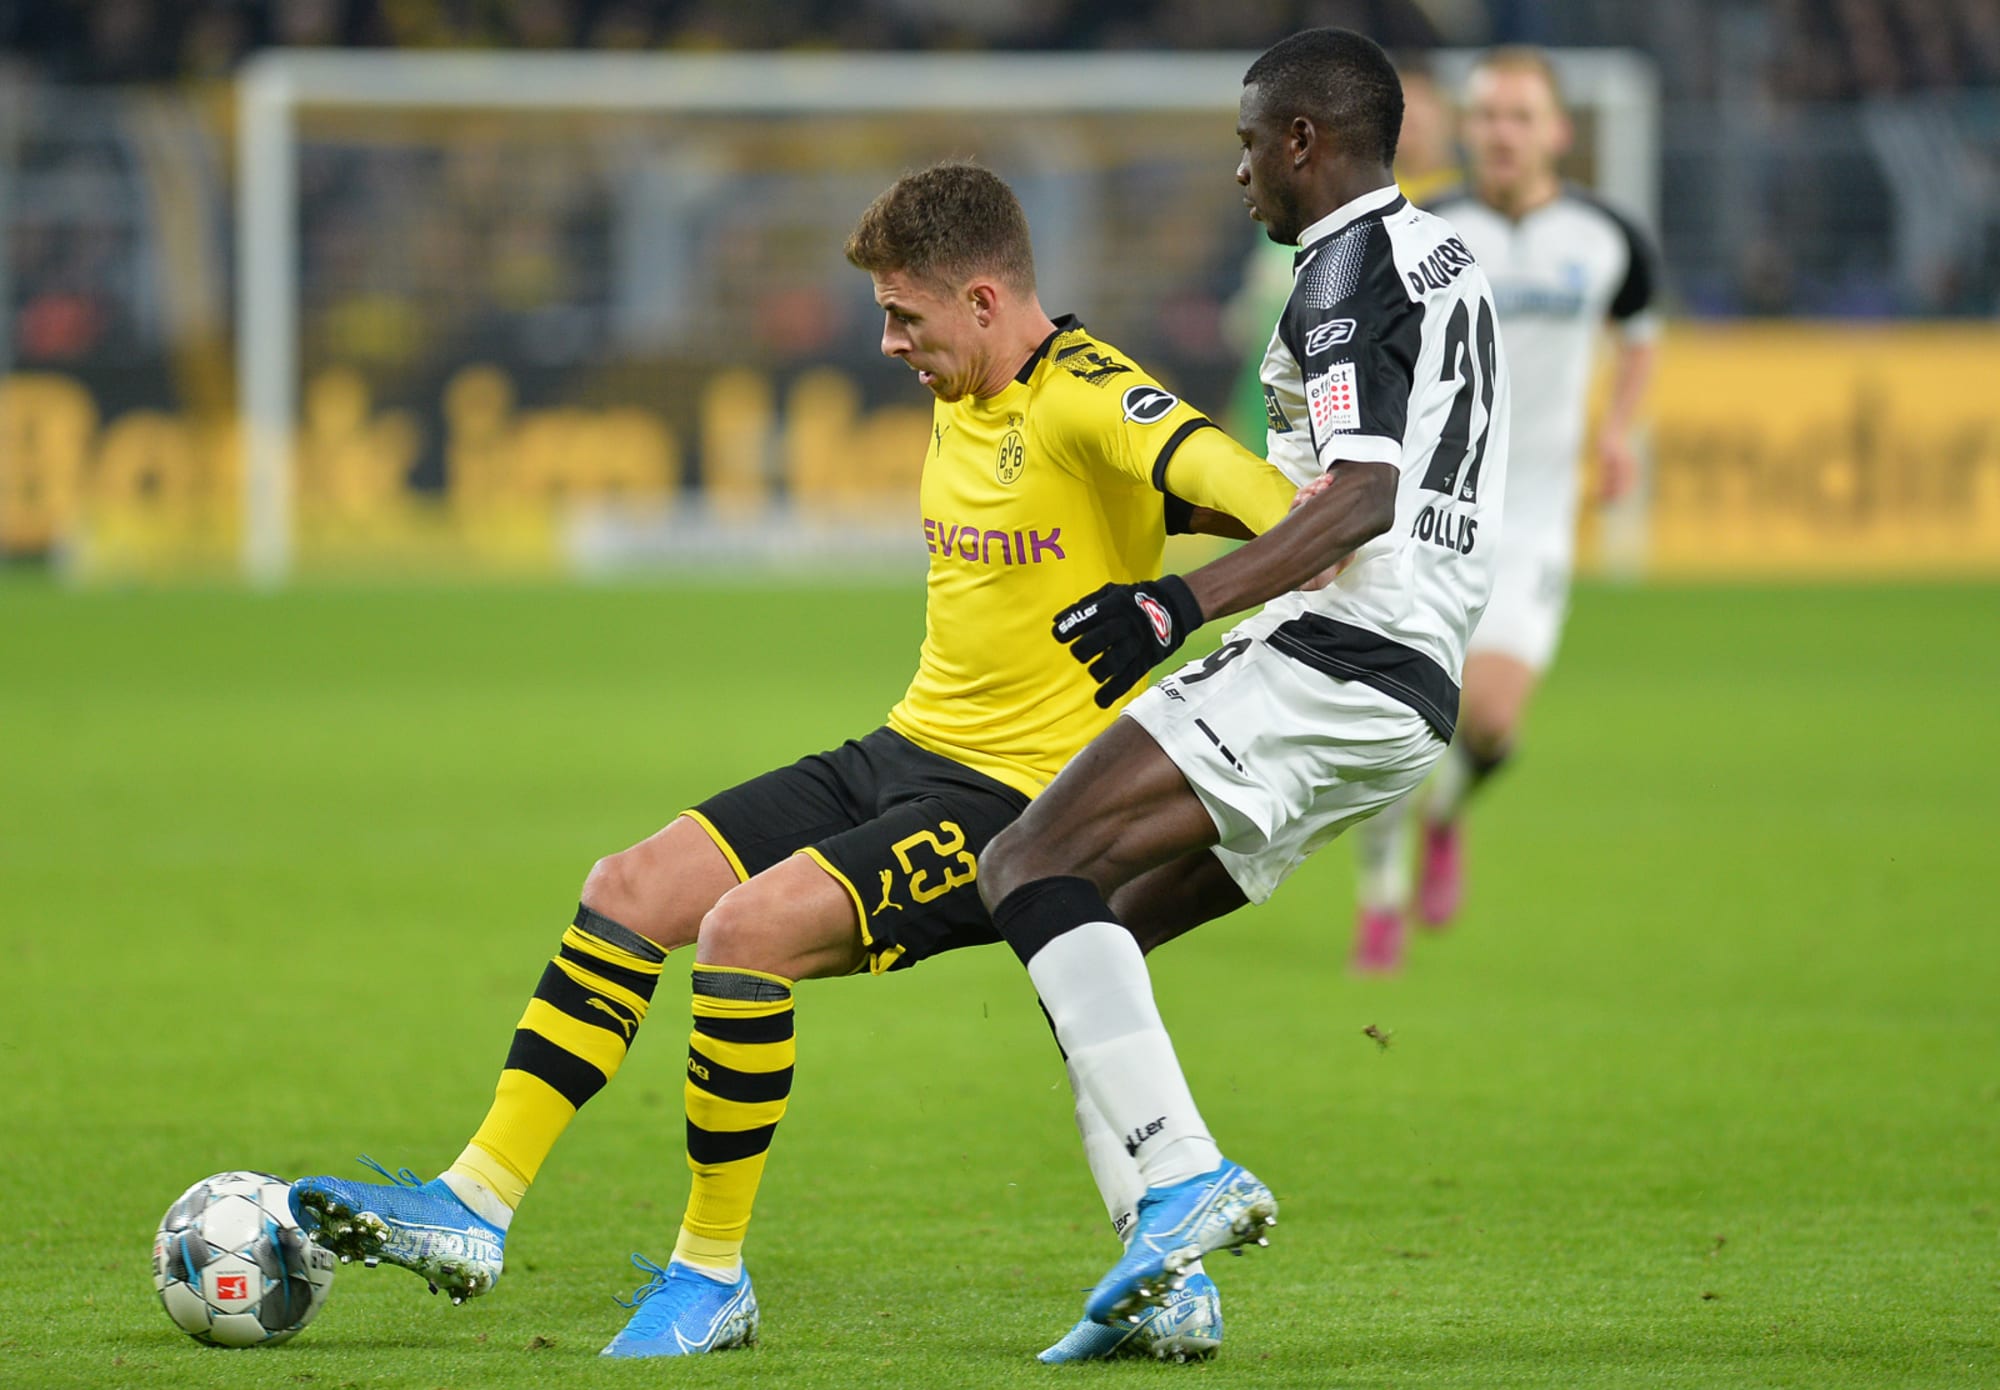 Watch Paderborn vs Borussia Dortmund Live Stream, TV info for Bundesliga clash